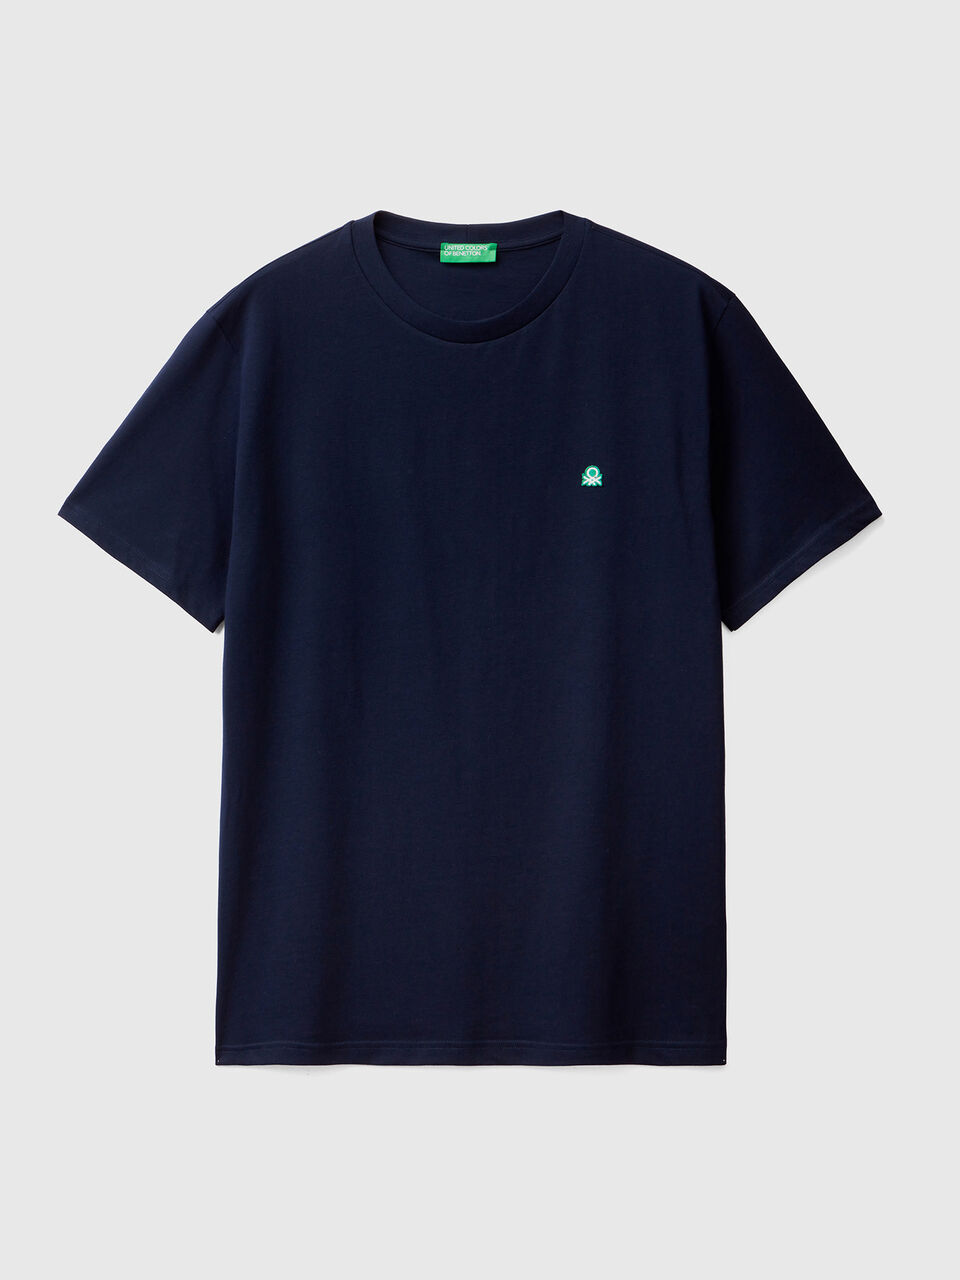 - Dark organic Benetton Blue cotton basic t-shirt | 100%